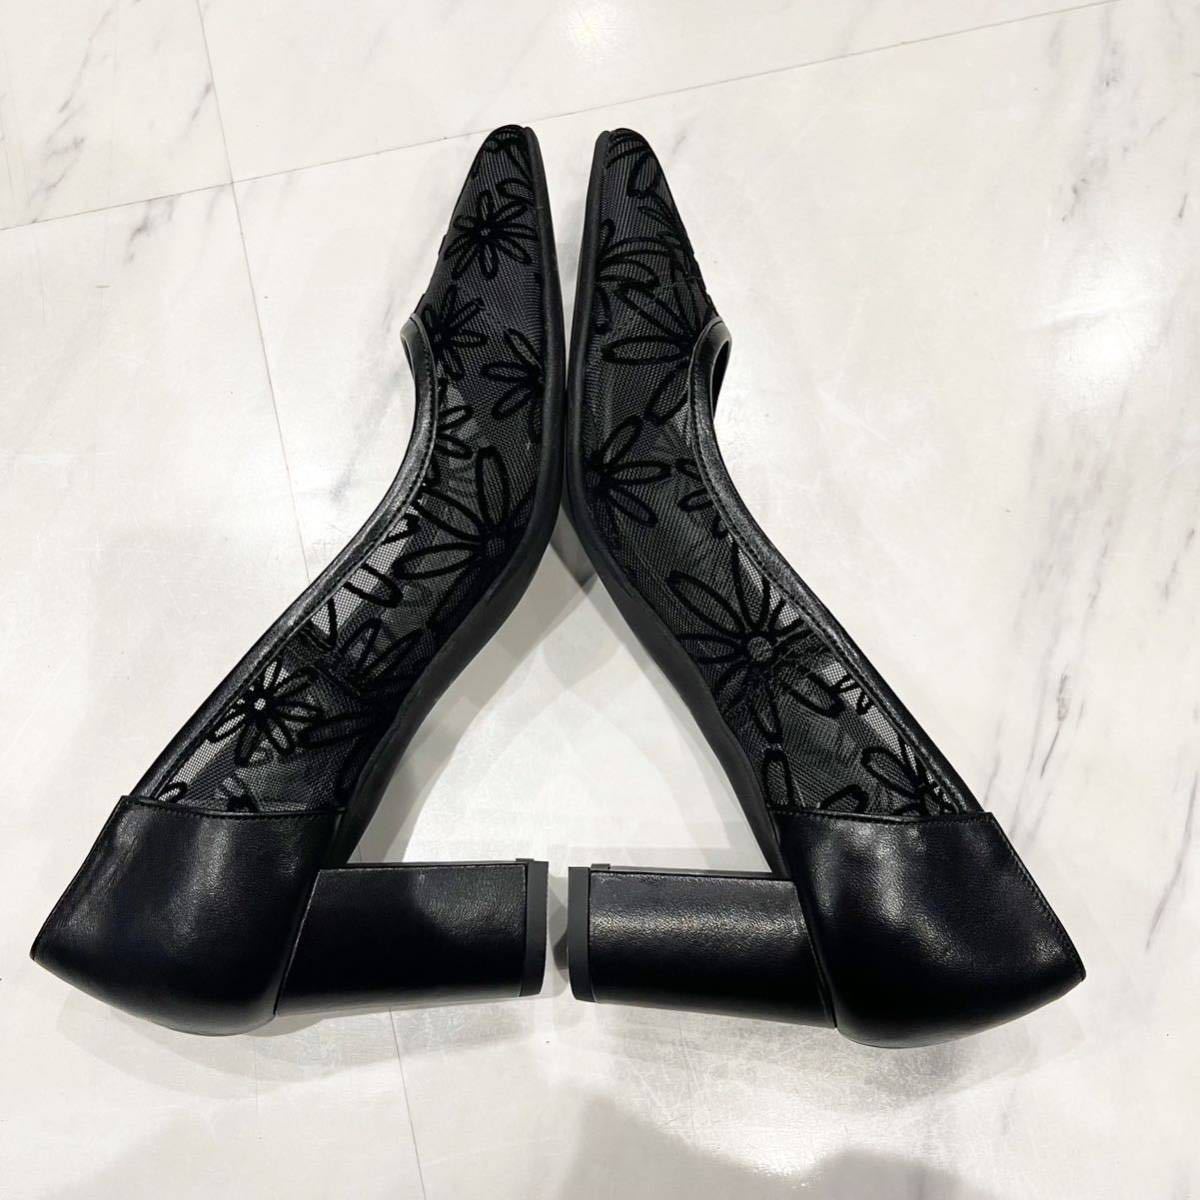 REGAL リーガル レディース シューズ 靴 パンプス レディース 約 24.5cm 相当 ブラック 黒 ラメ_画像9